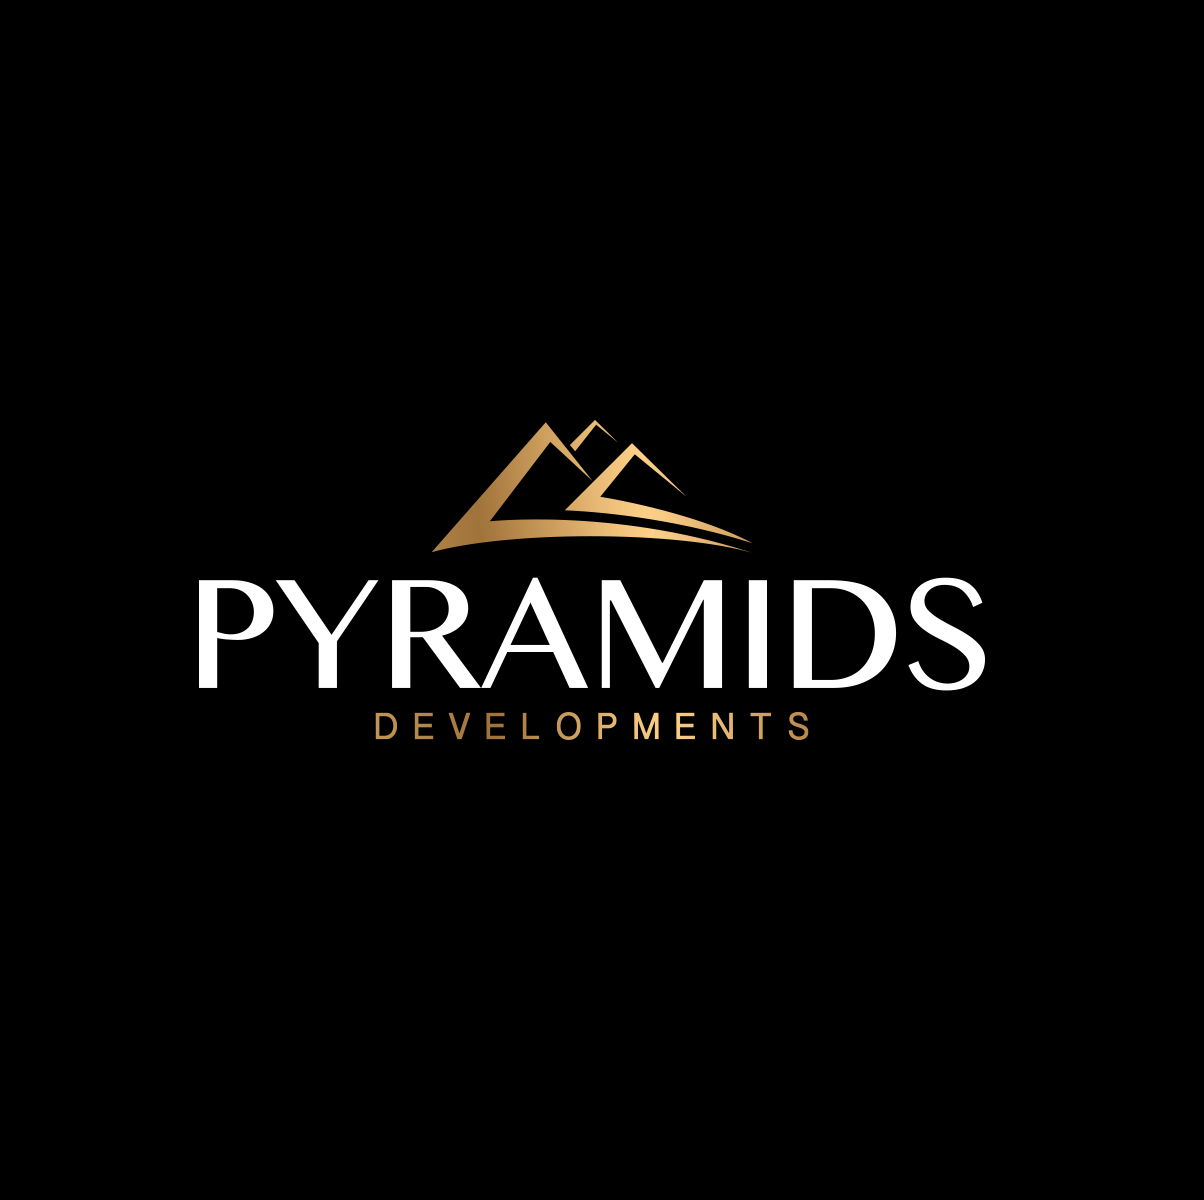 وظائف وفرص عمل فى Pyramids Developments | جوبيانو